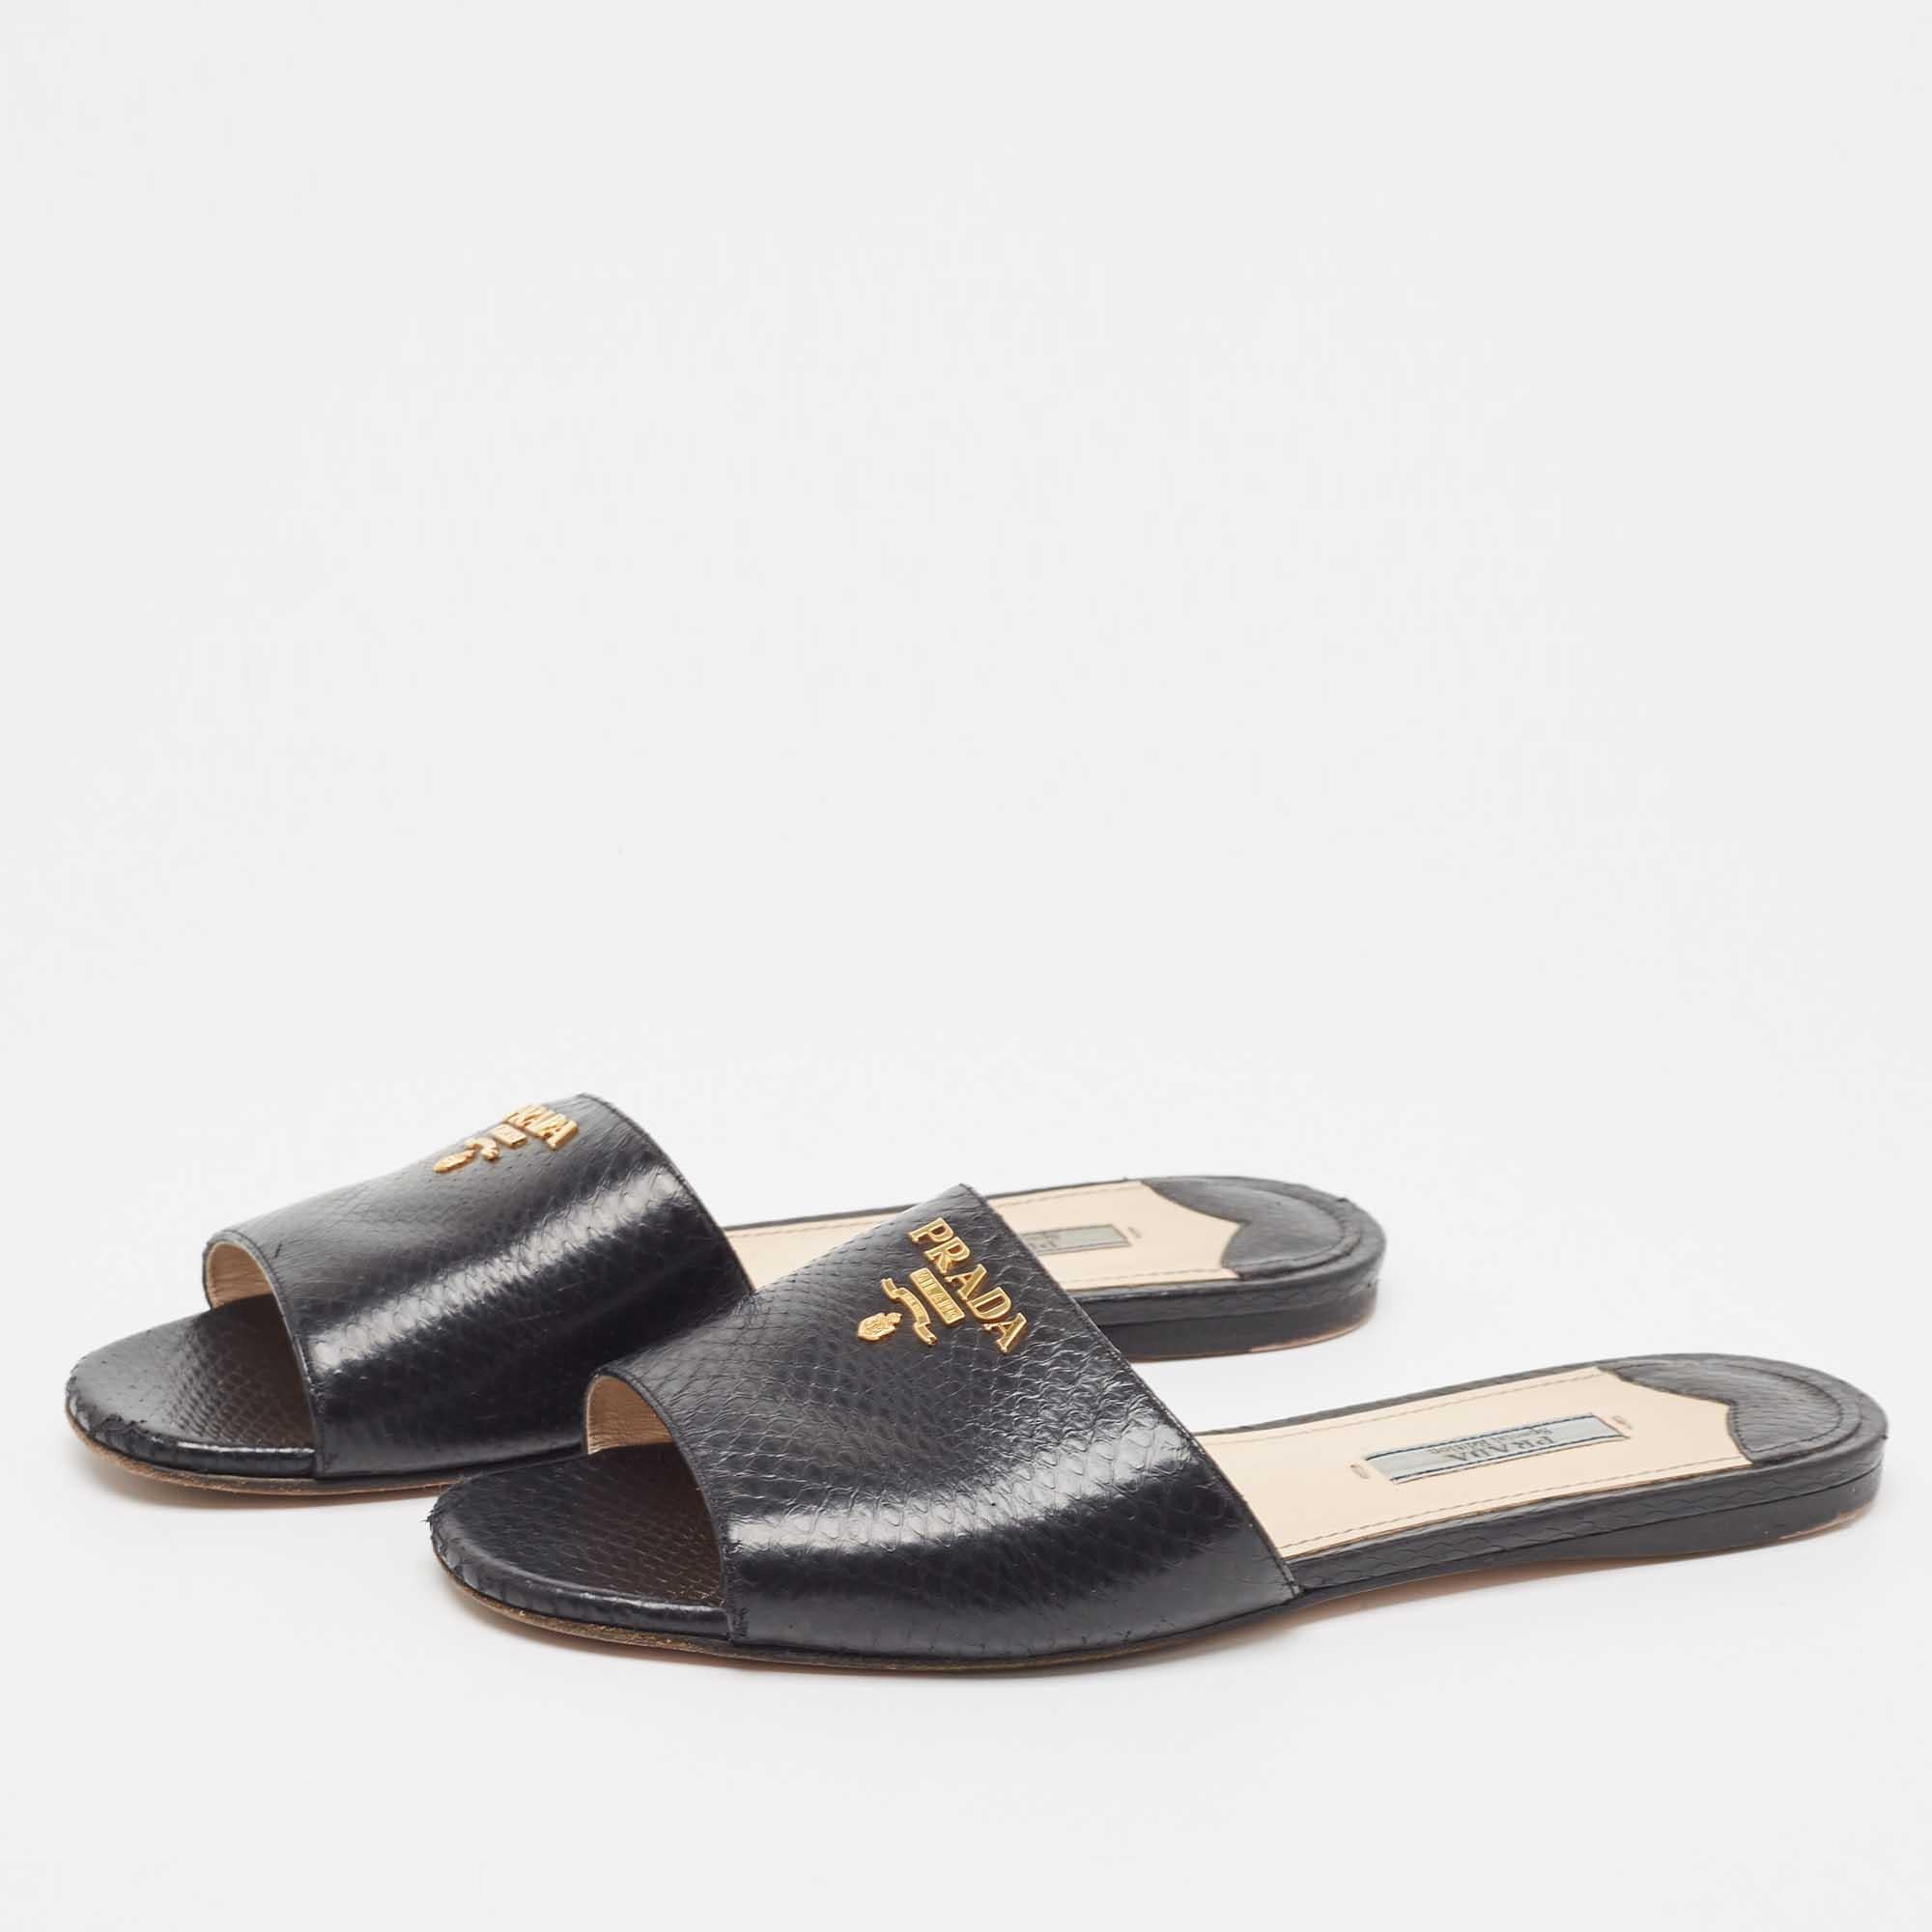 Prada Black Python Embossed Leather Flat Slide Sandals Size 37.5 3